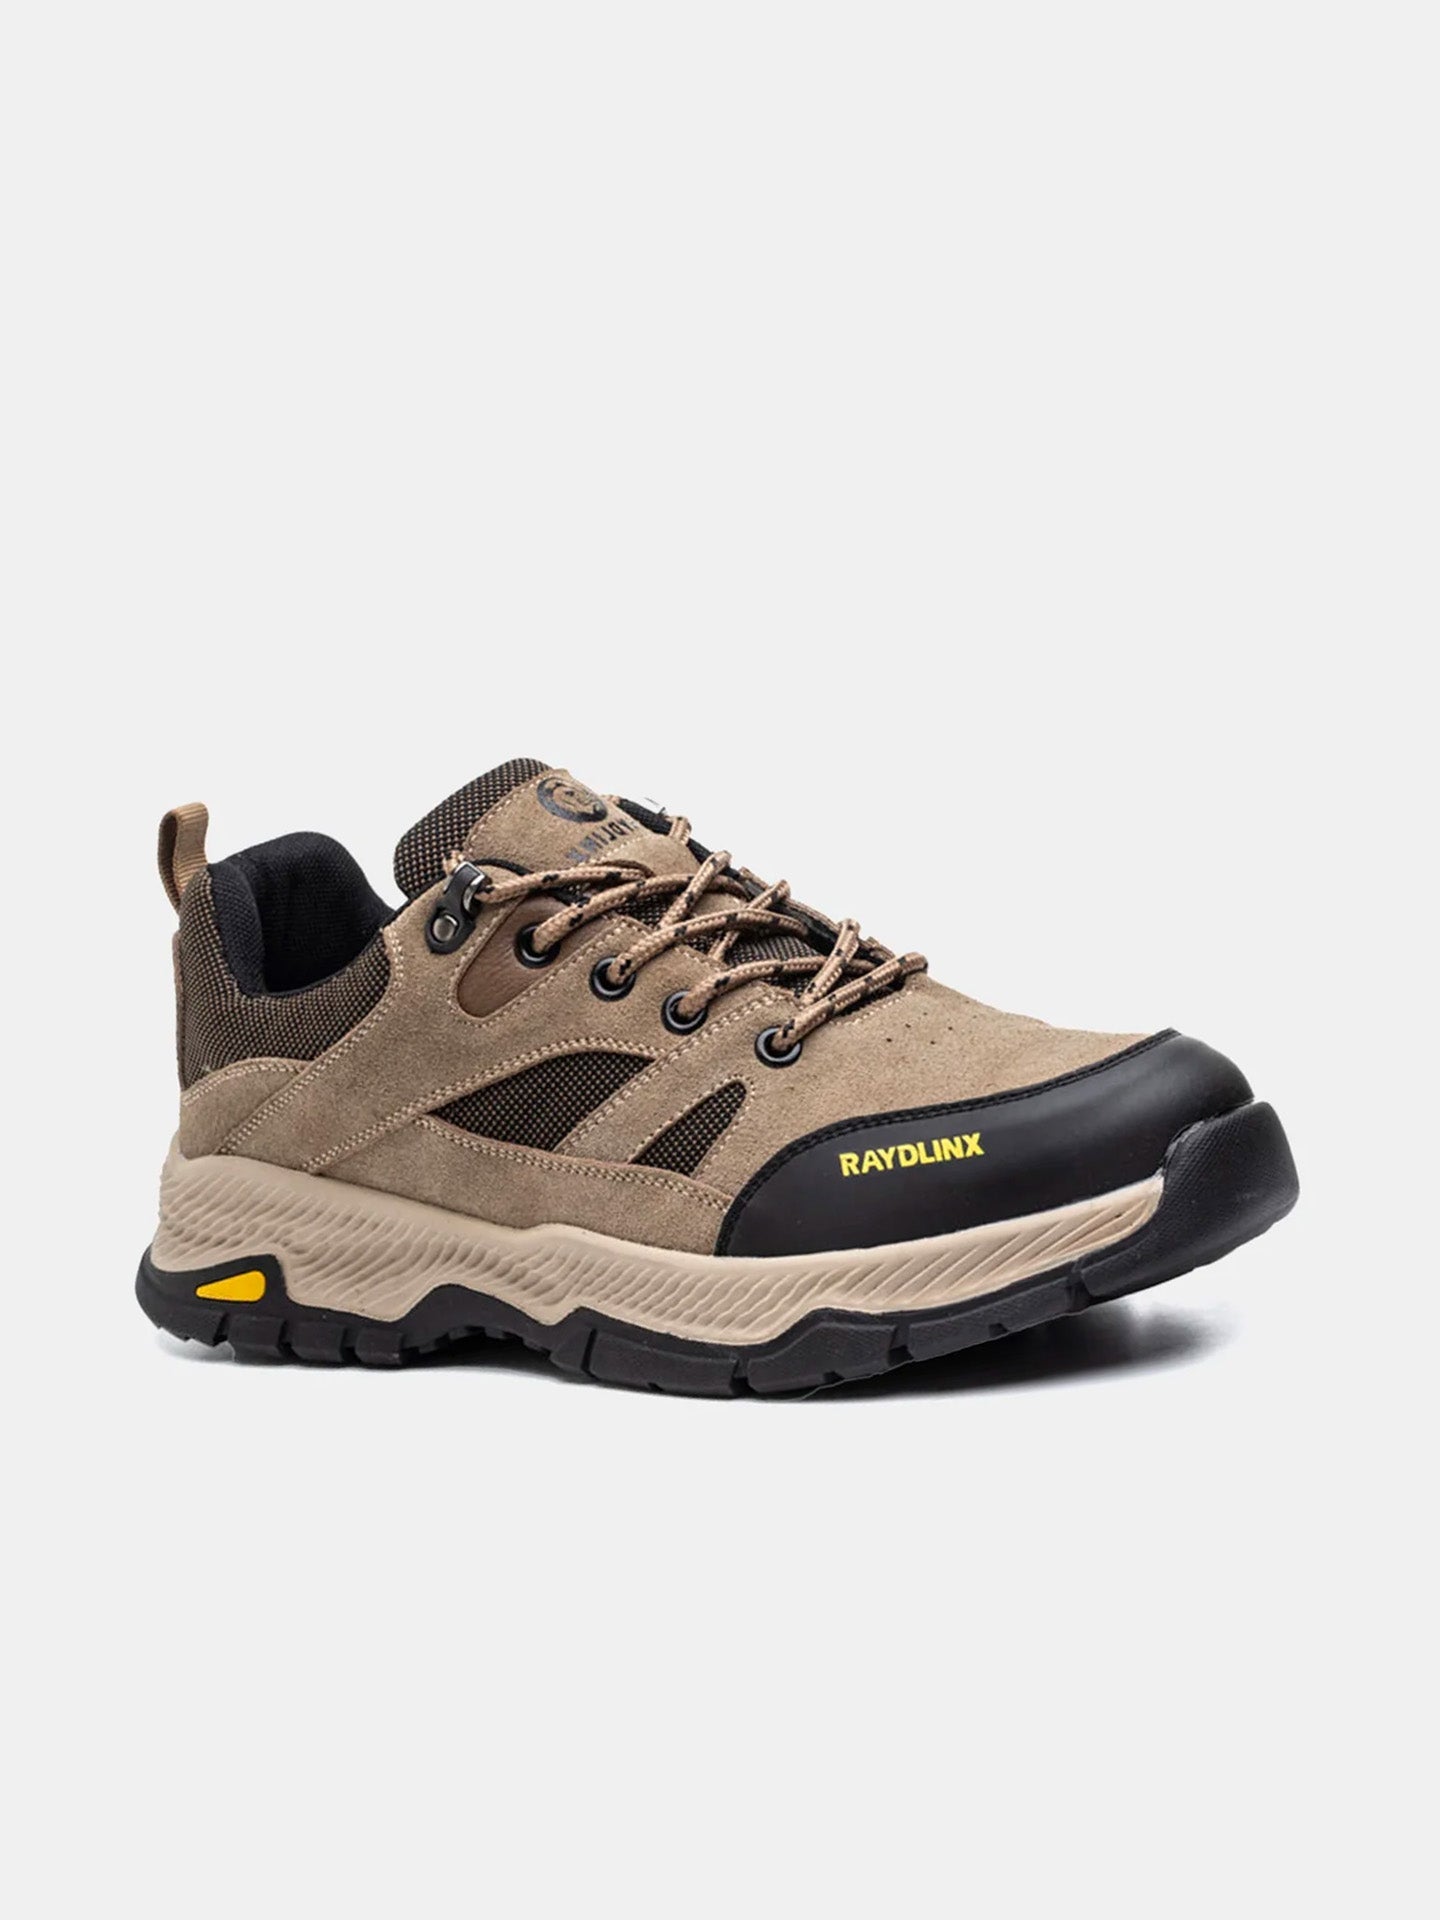 Raydlinx Men's Mountain Hiking Walking Shoes #color_Grey